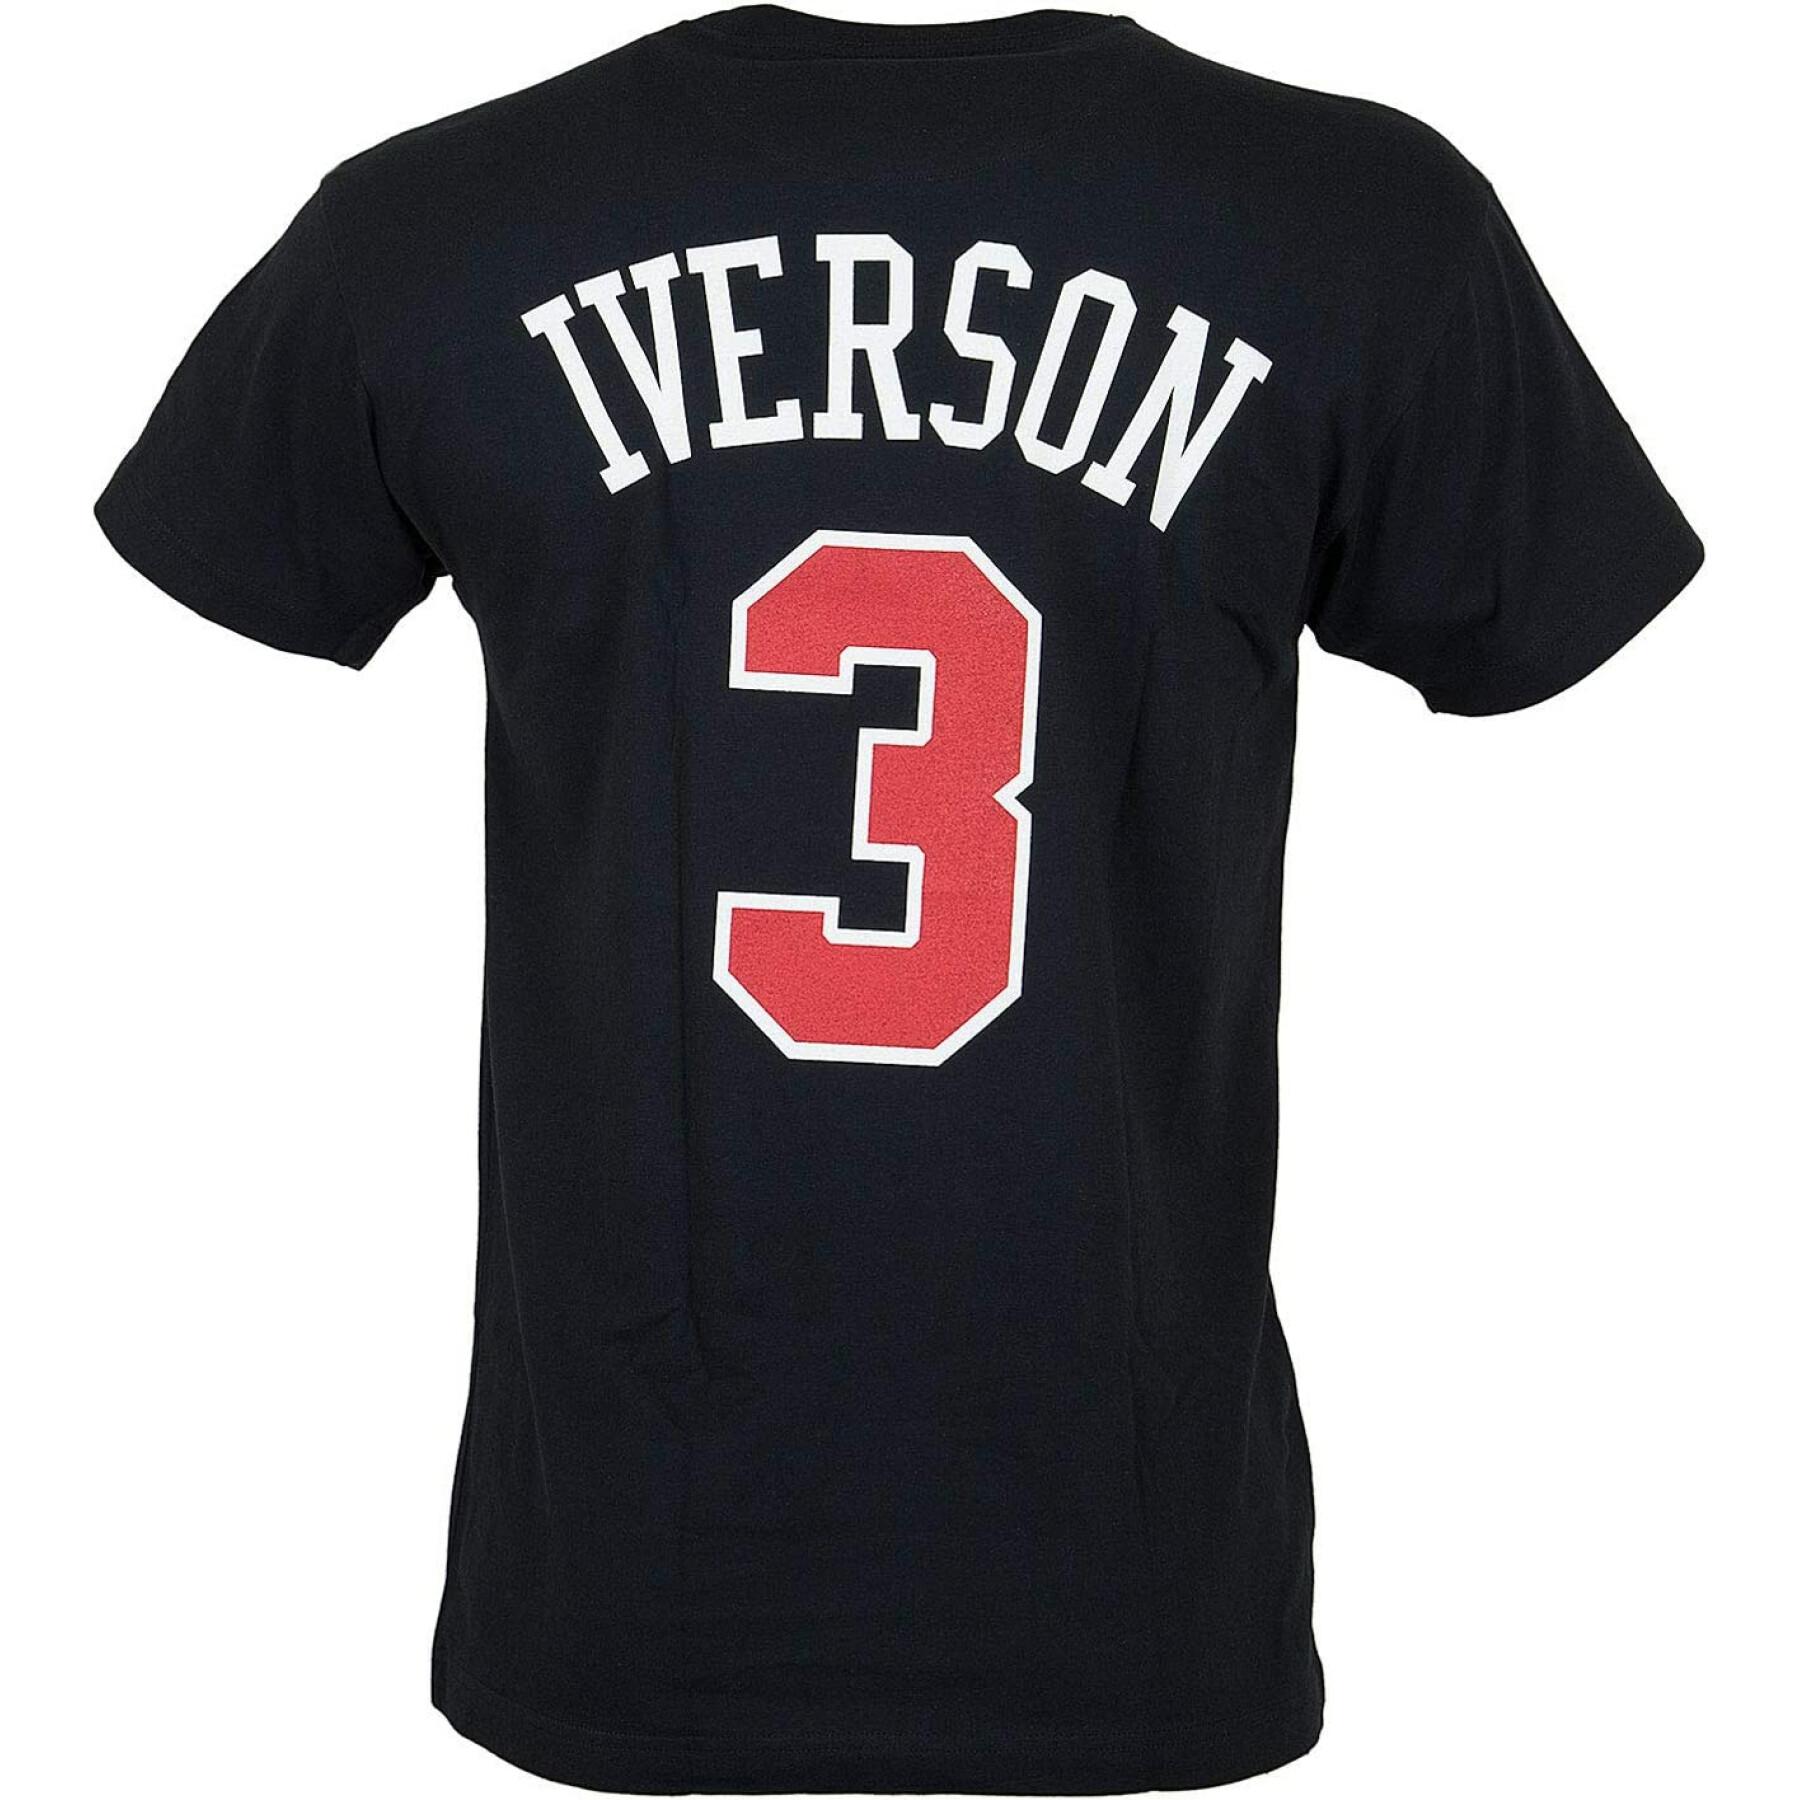 T-shirt Philadelphia 76ers name & number tailored Allen Iverson